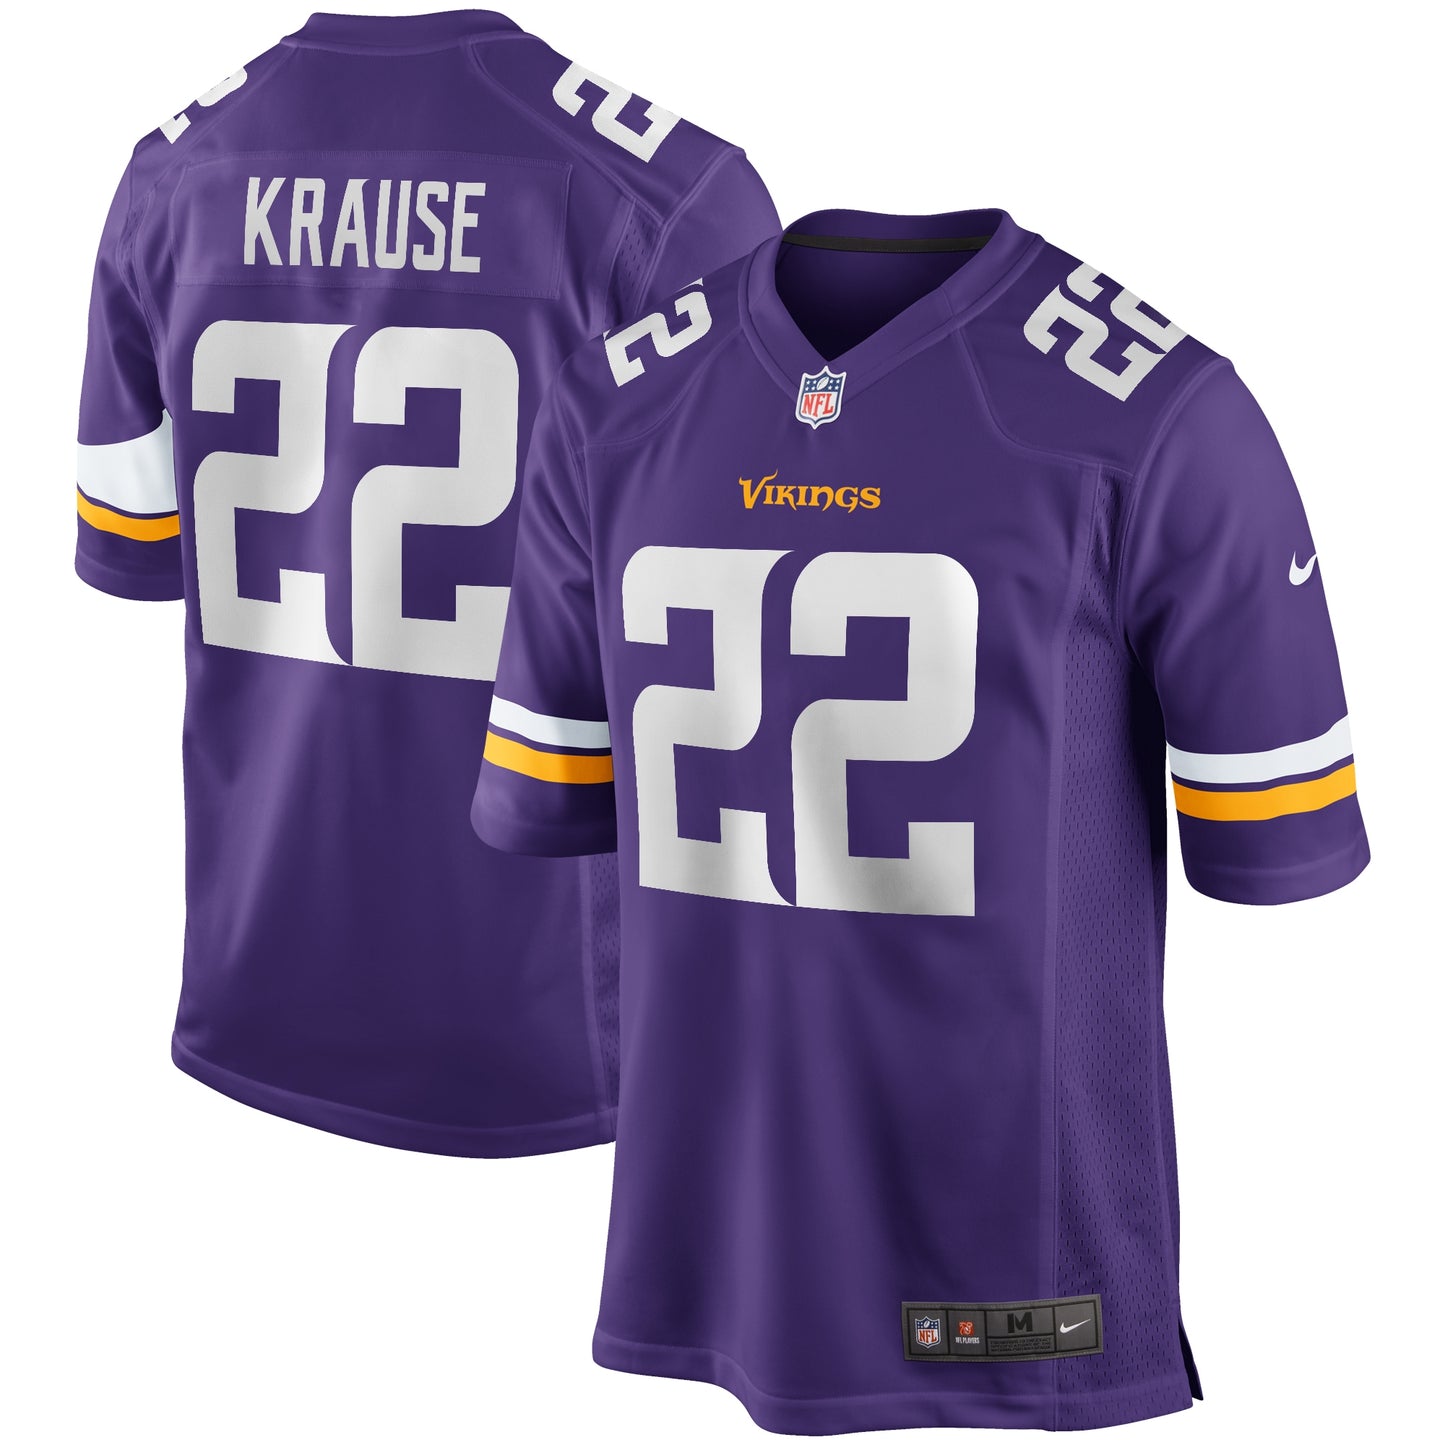 Paul Krause Minnesota Vikings Nike Game Retired Player Jersey - Purple